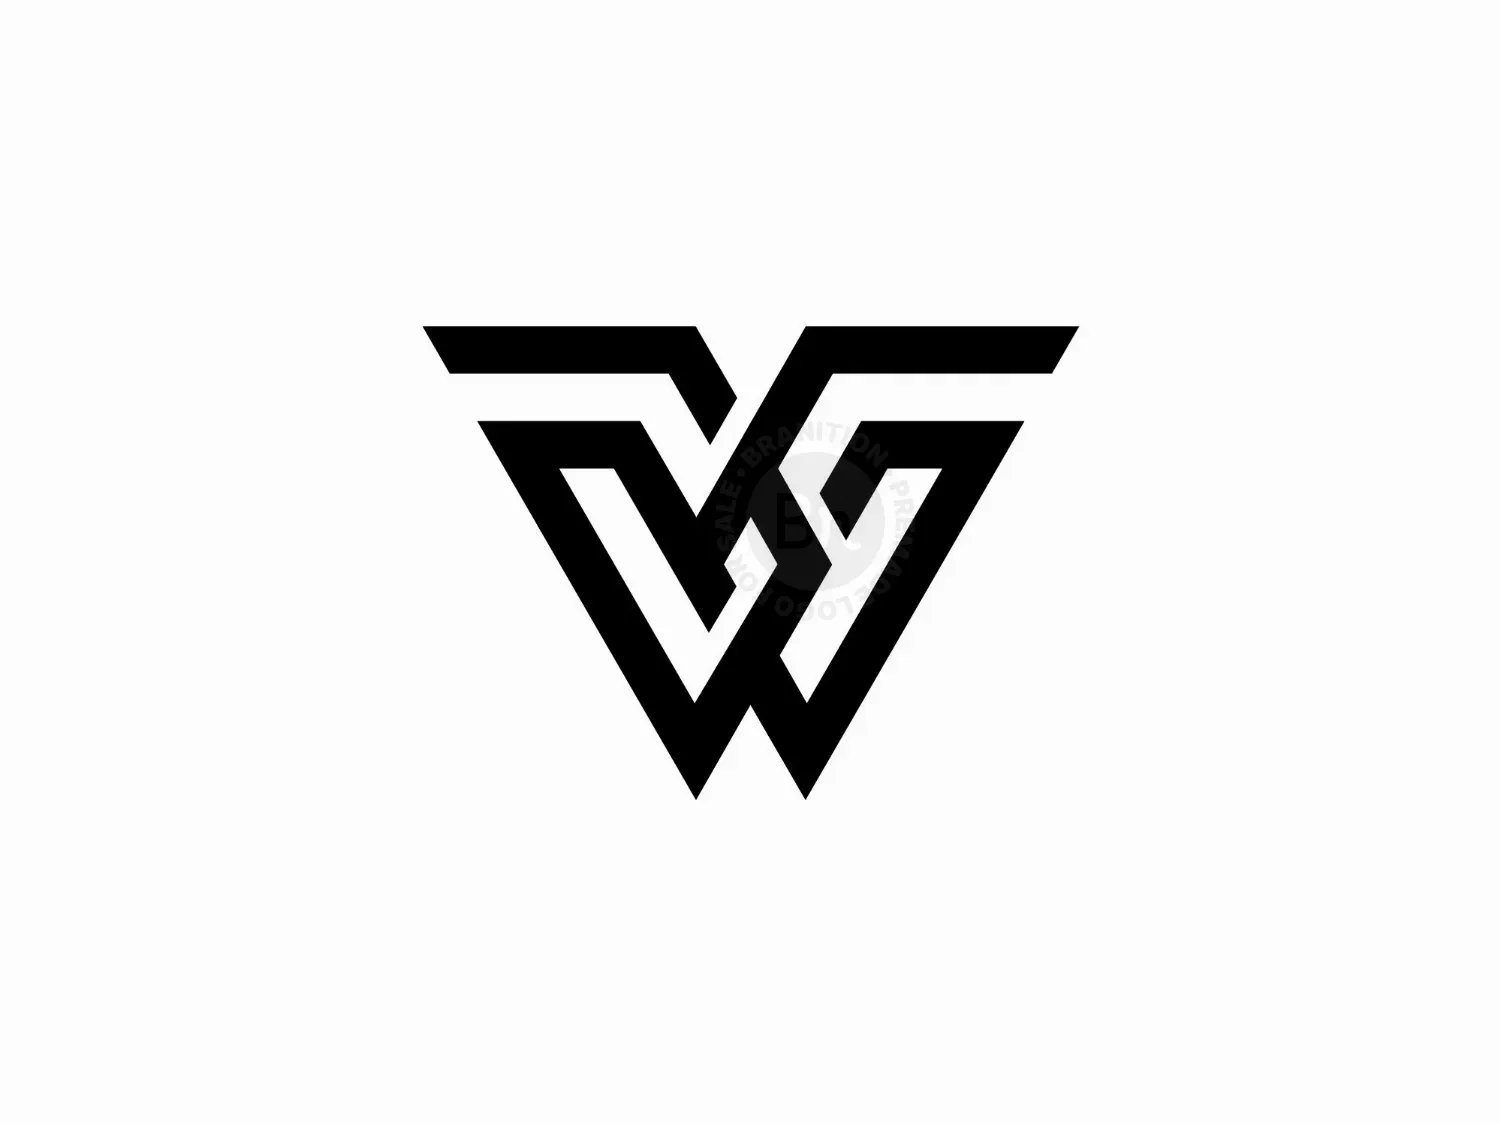 Wg initial letter vector logo icon Illustration #146097868